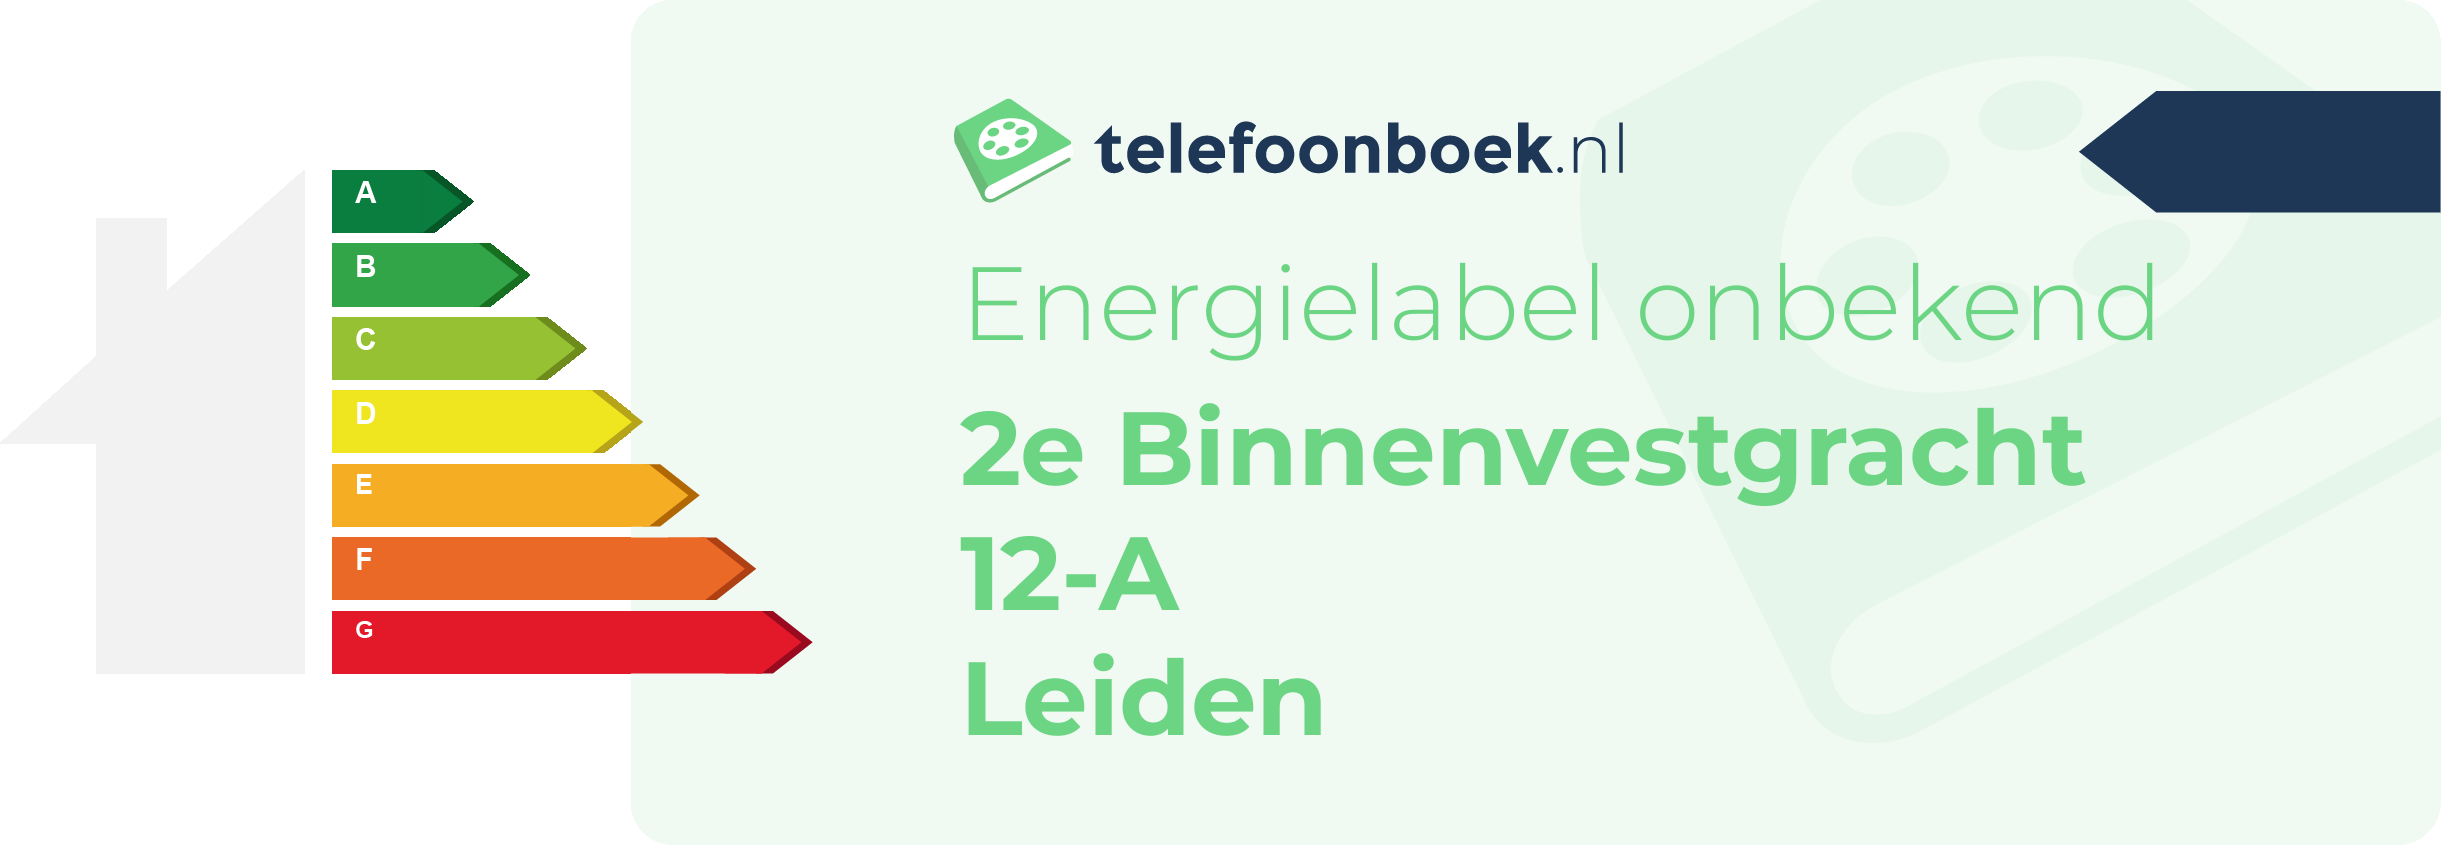 Energielabel 2e Binnenvestgracht 12-A Leiden